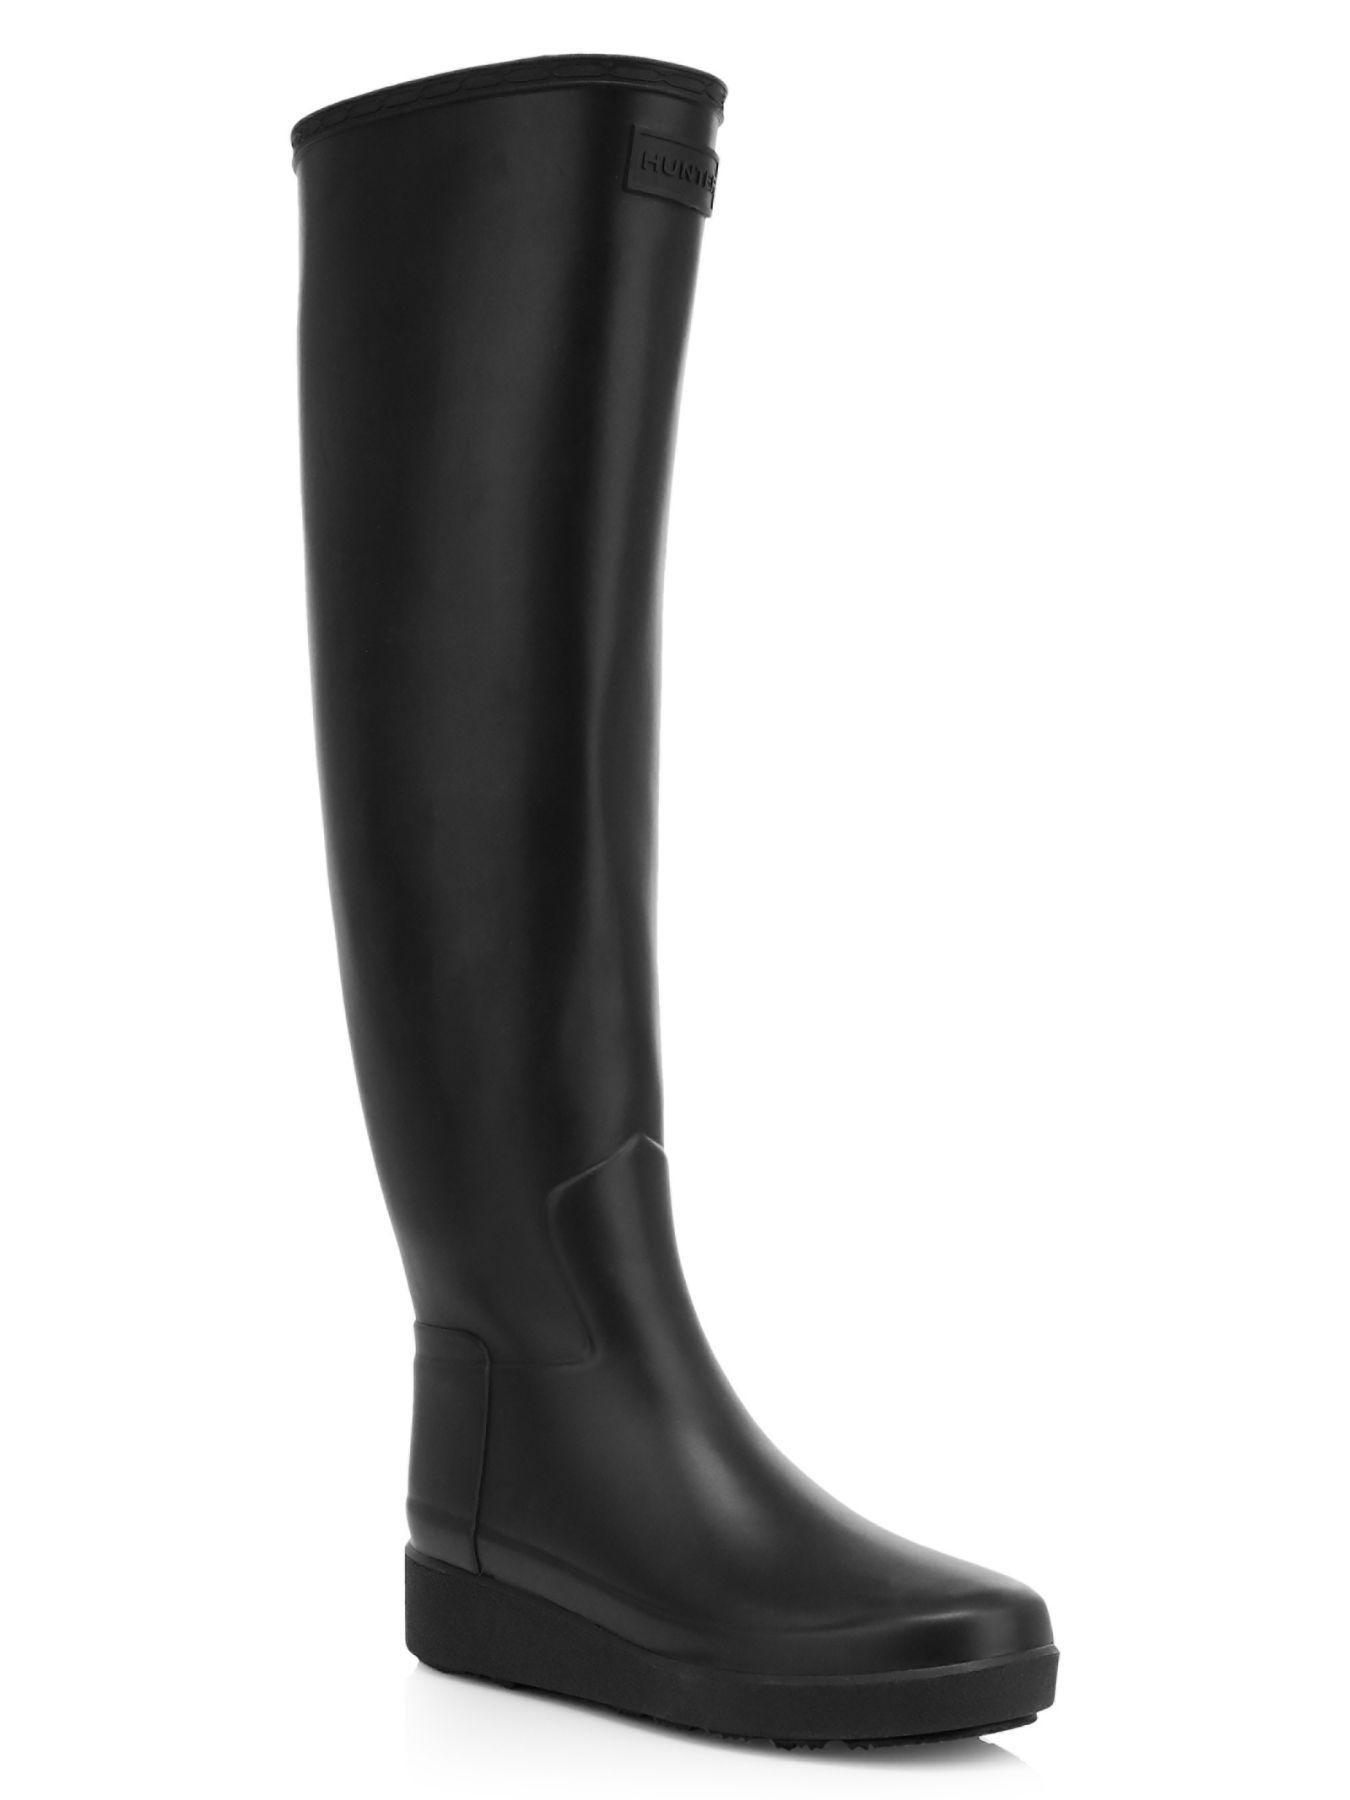 HUNTER Rubber Refined Creeper Tall Rain Boots in Black - Lyst